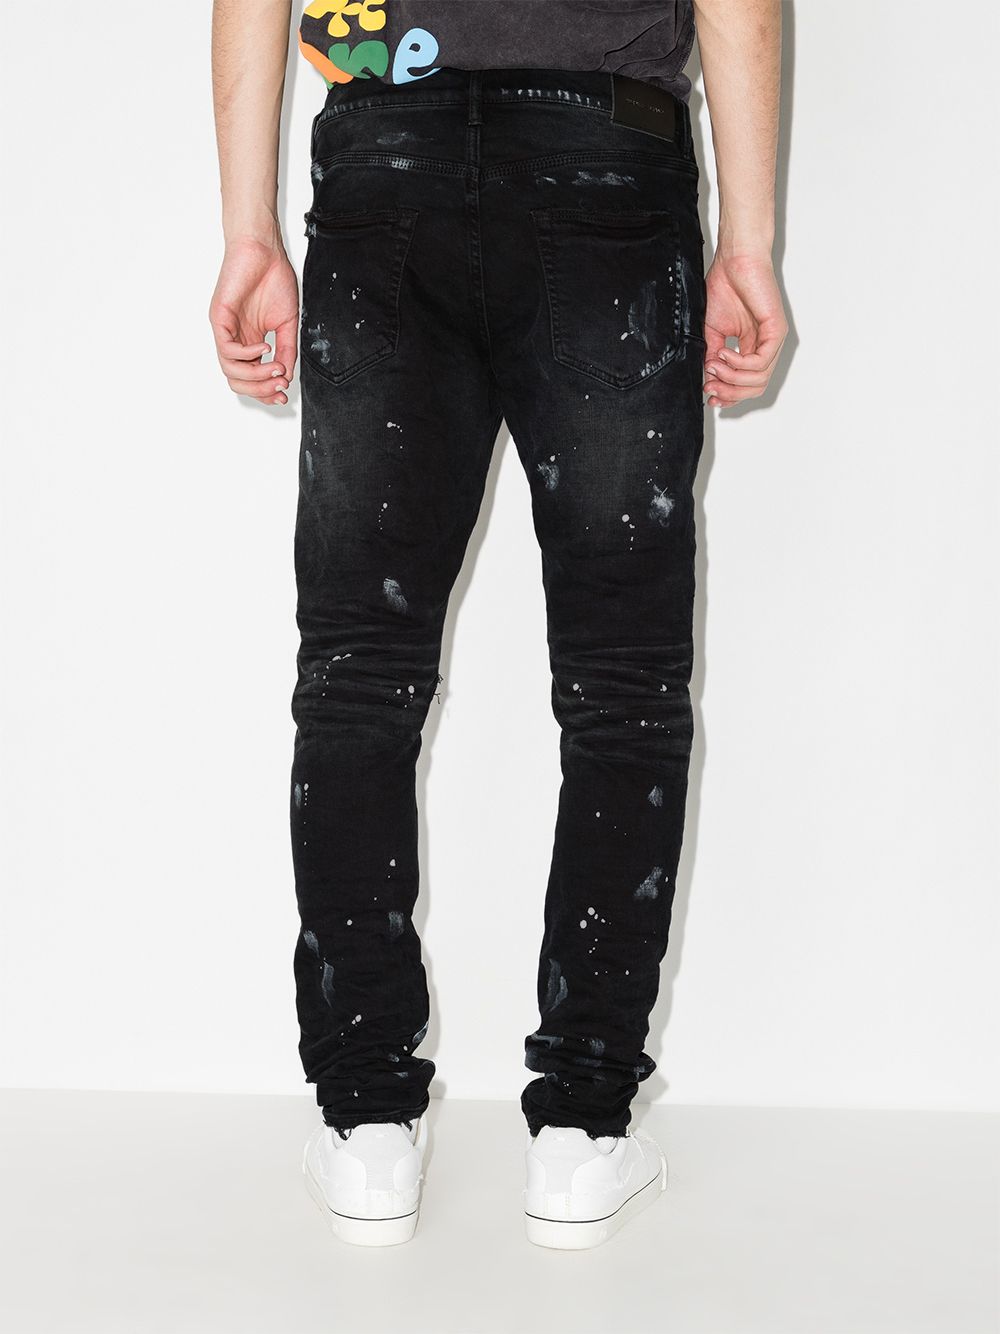 jeans skinny nero effetto vernice